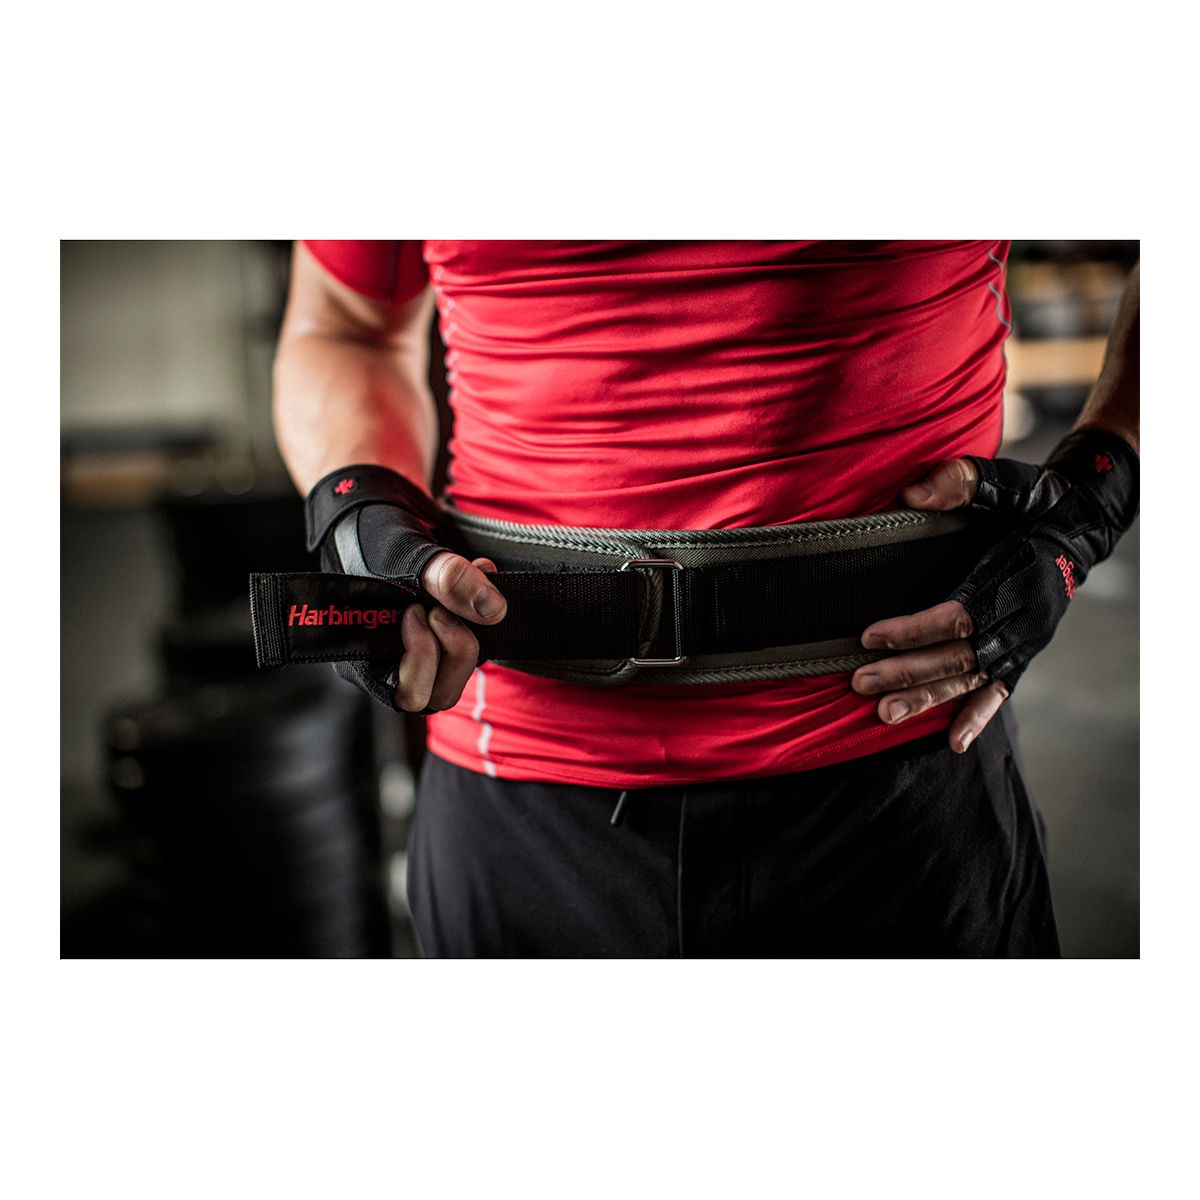 Harbingere Men's FlexFit Contour Weight Lifting Belt, 6 Inch